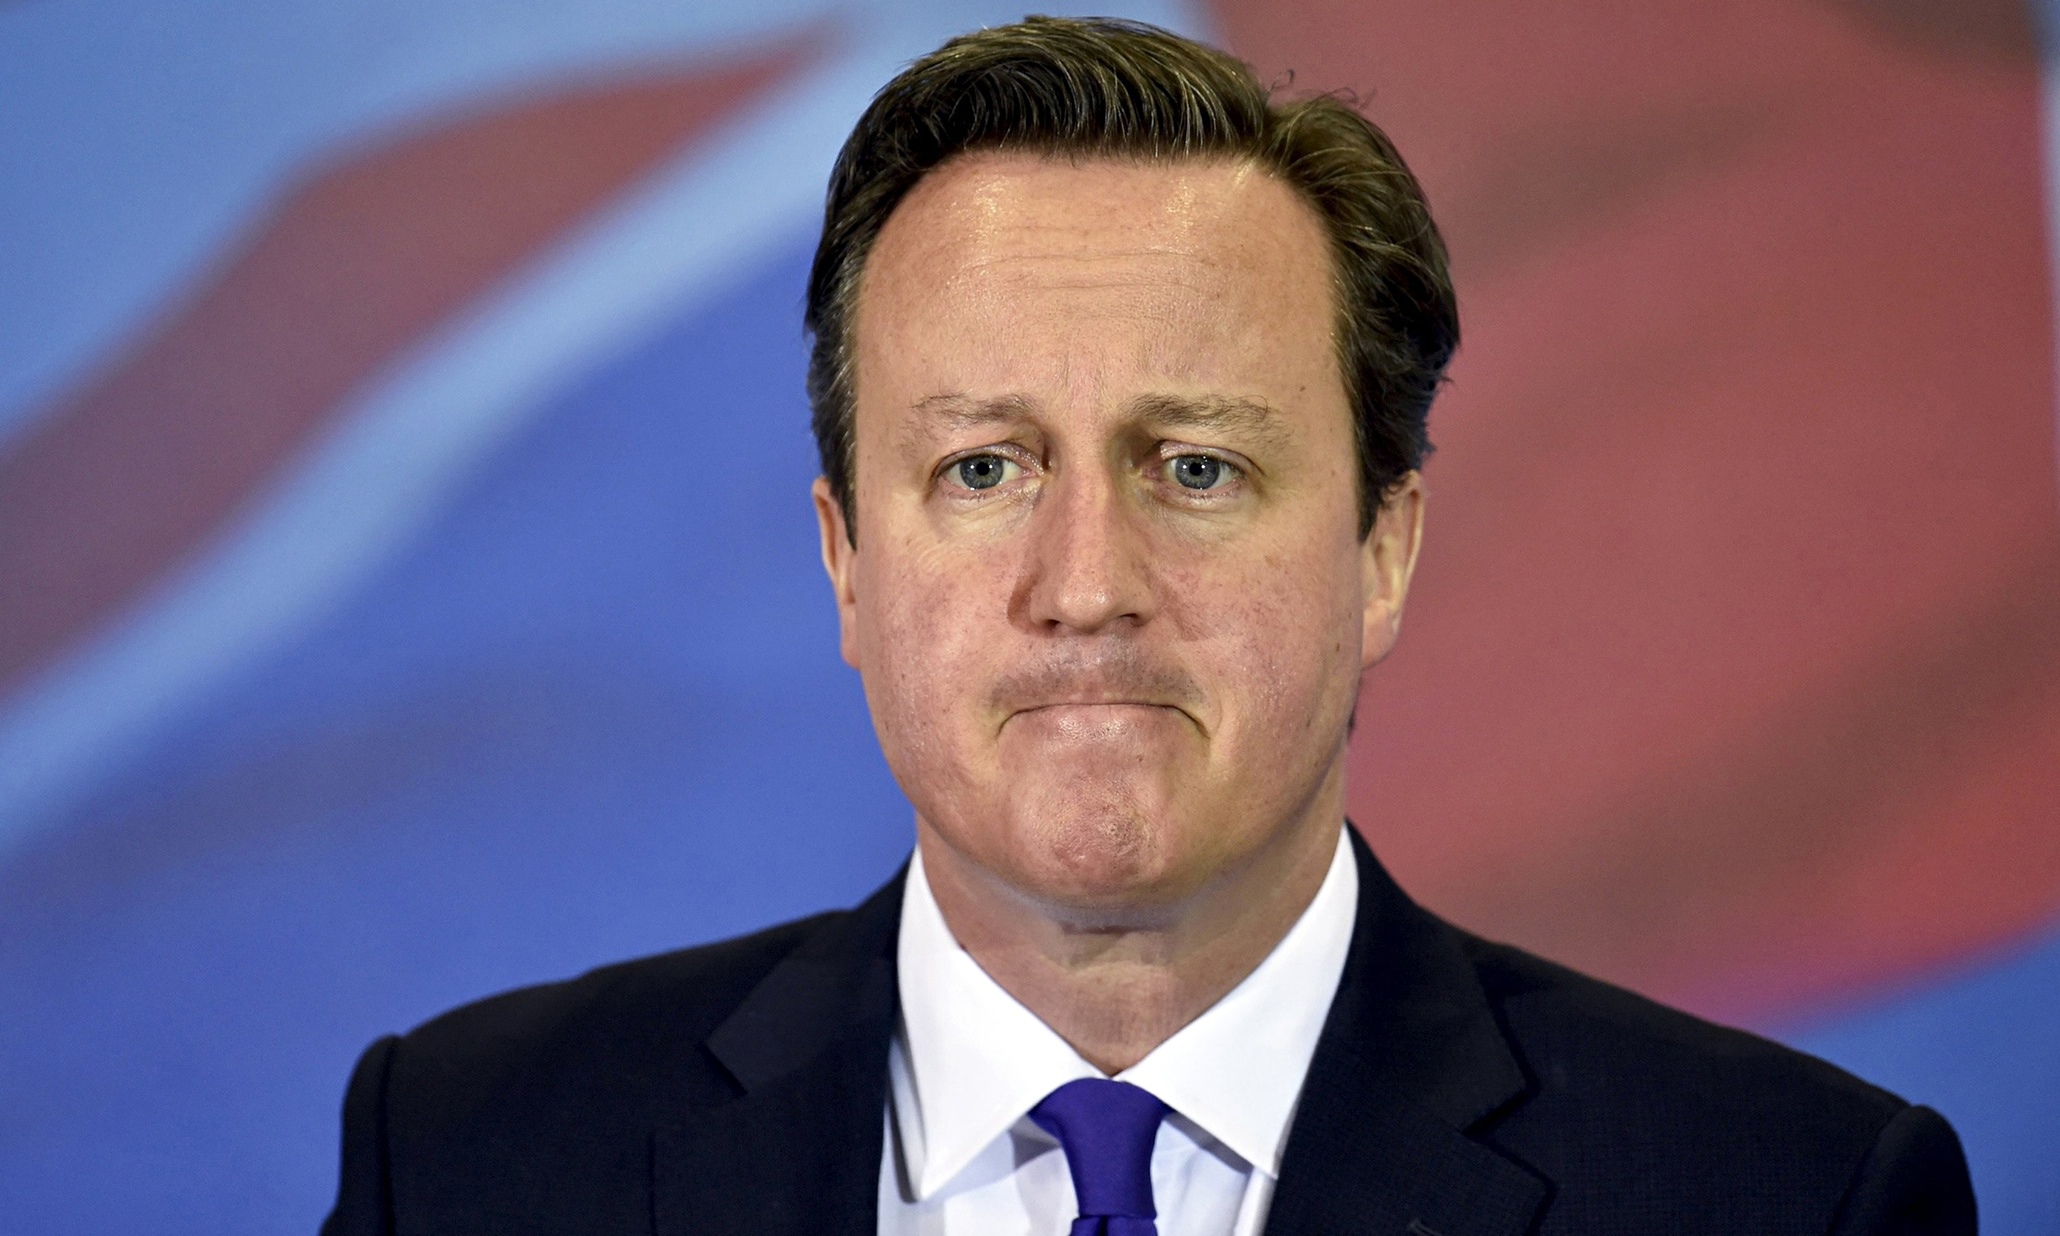 Le Premier ministre britannique,David Cameron